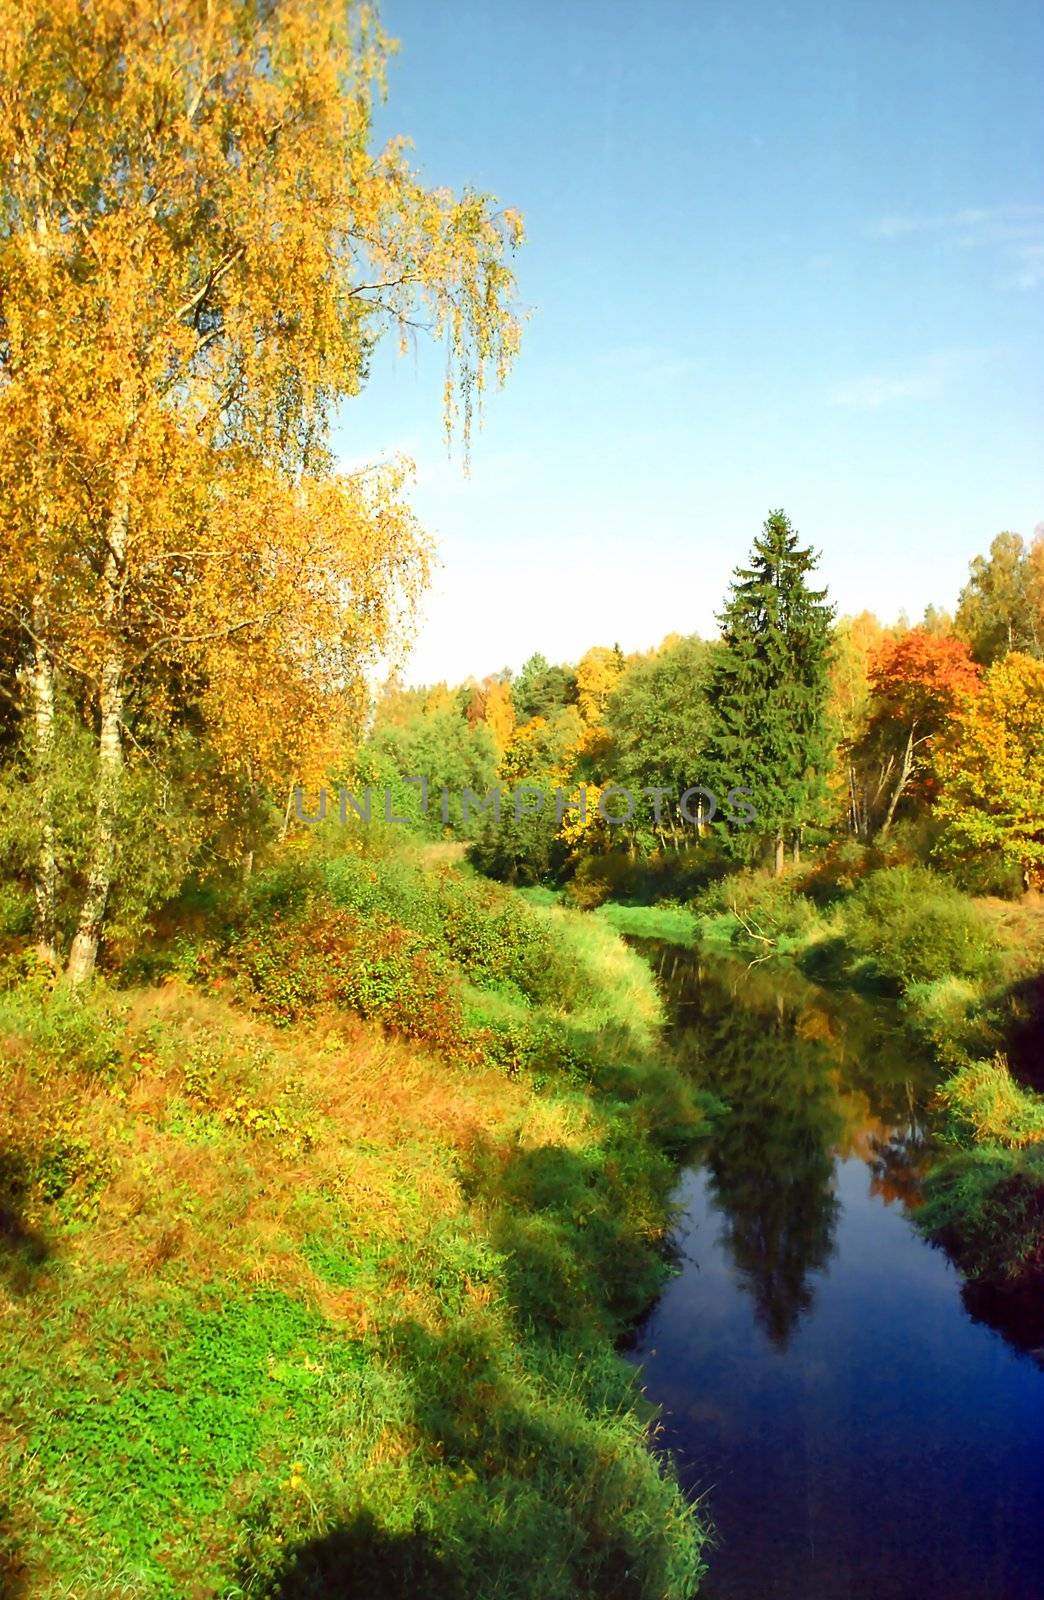 Splendor of autumn nature by mulden